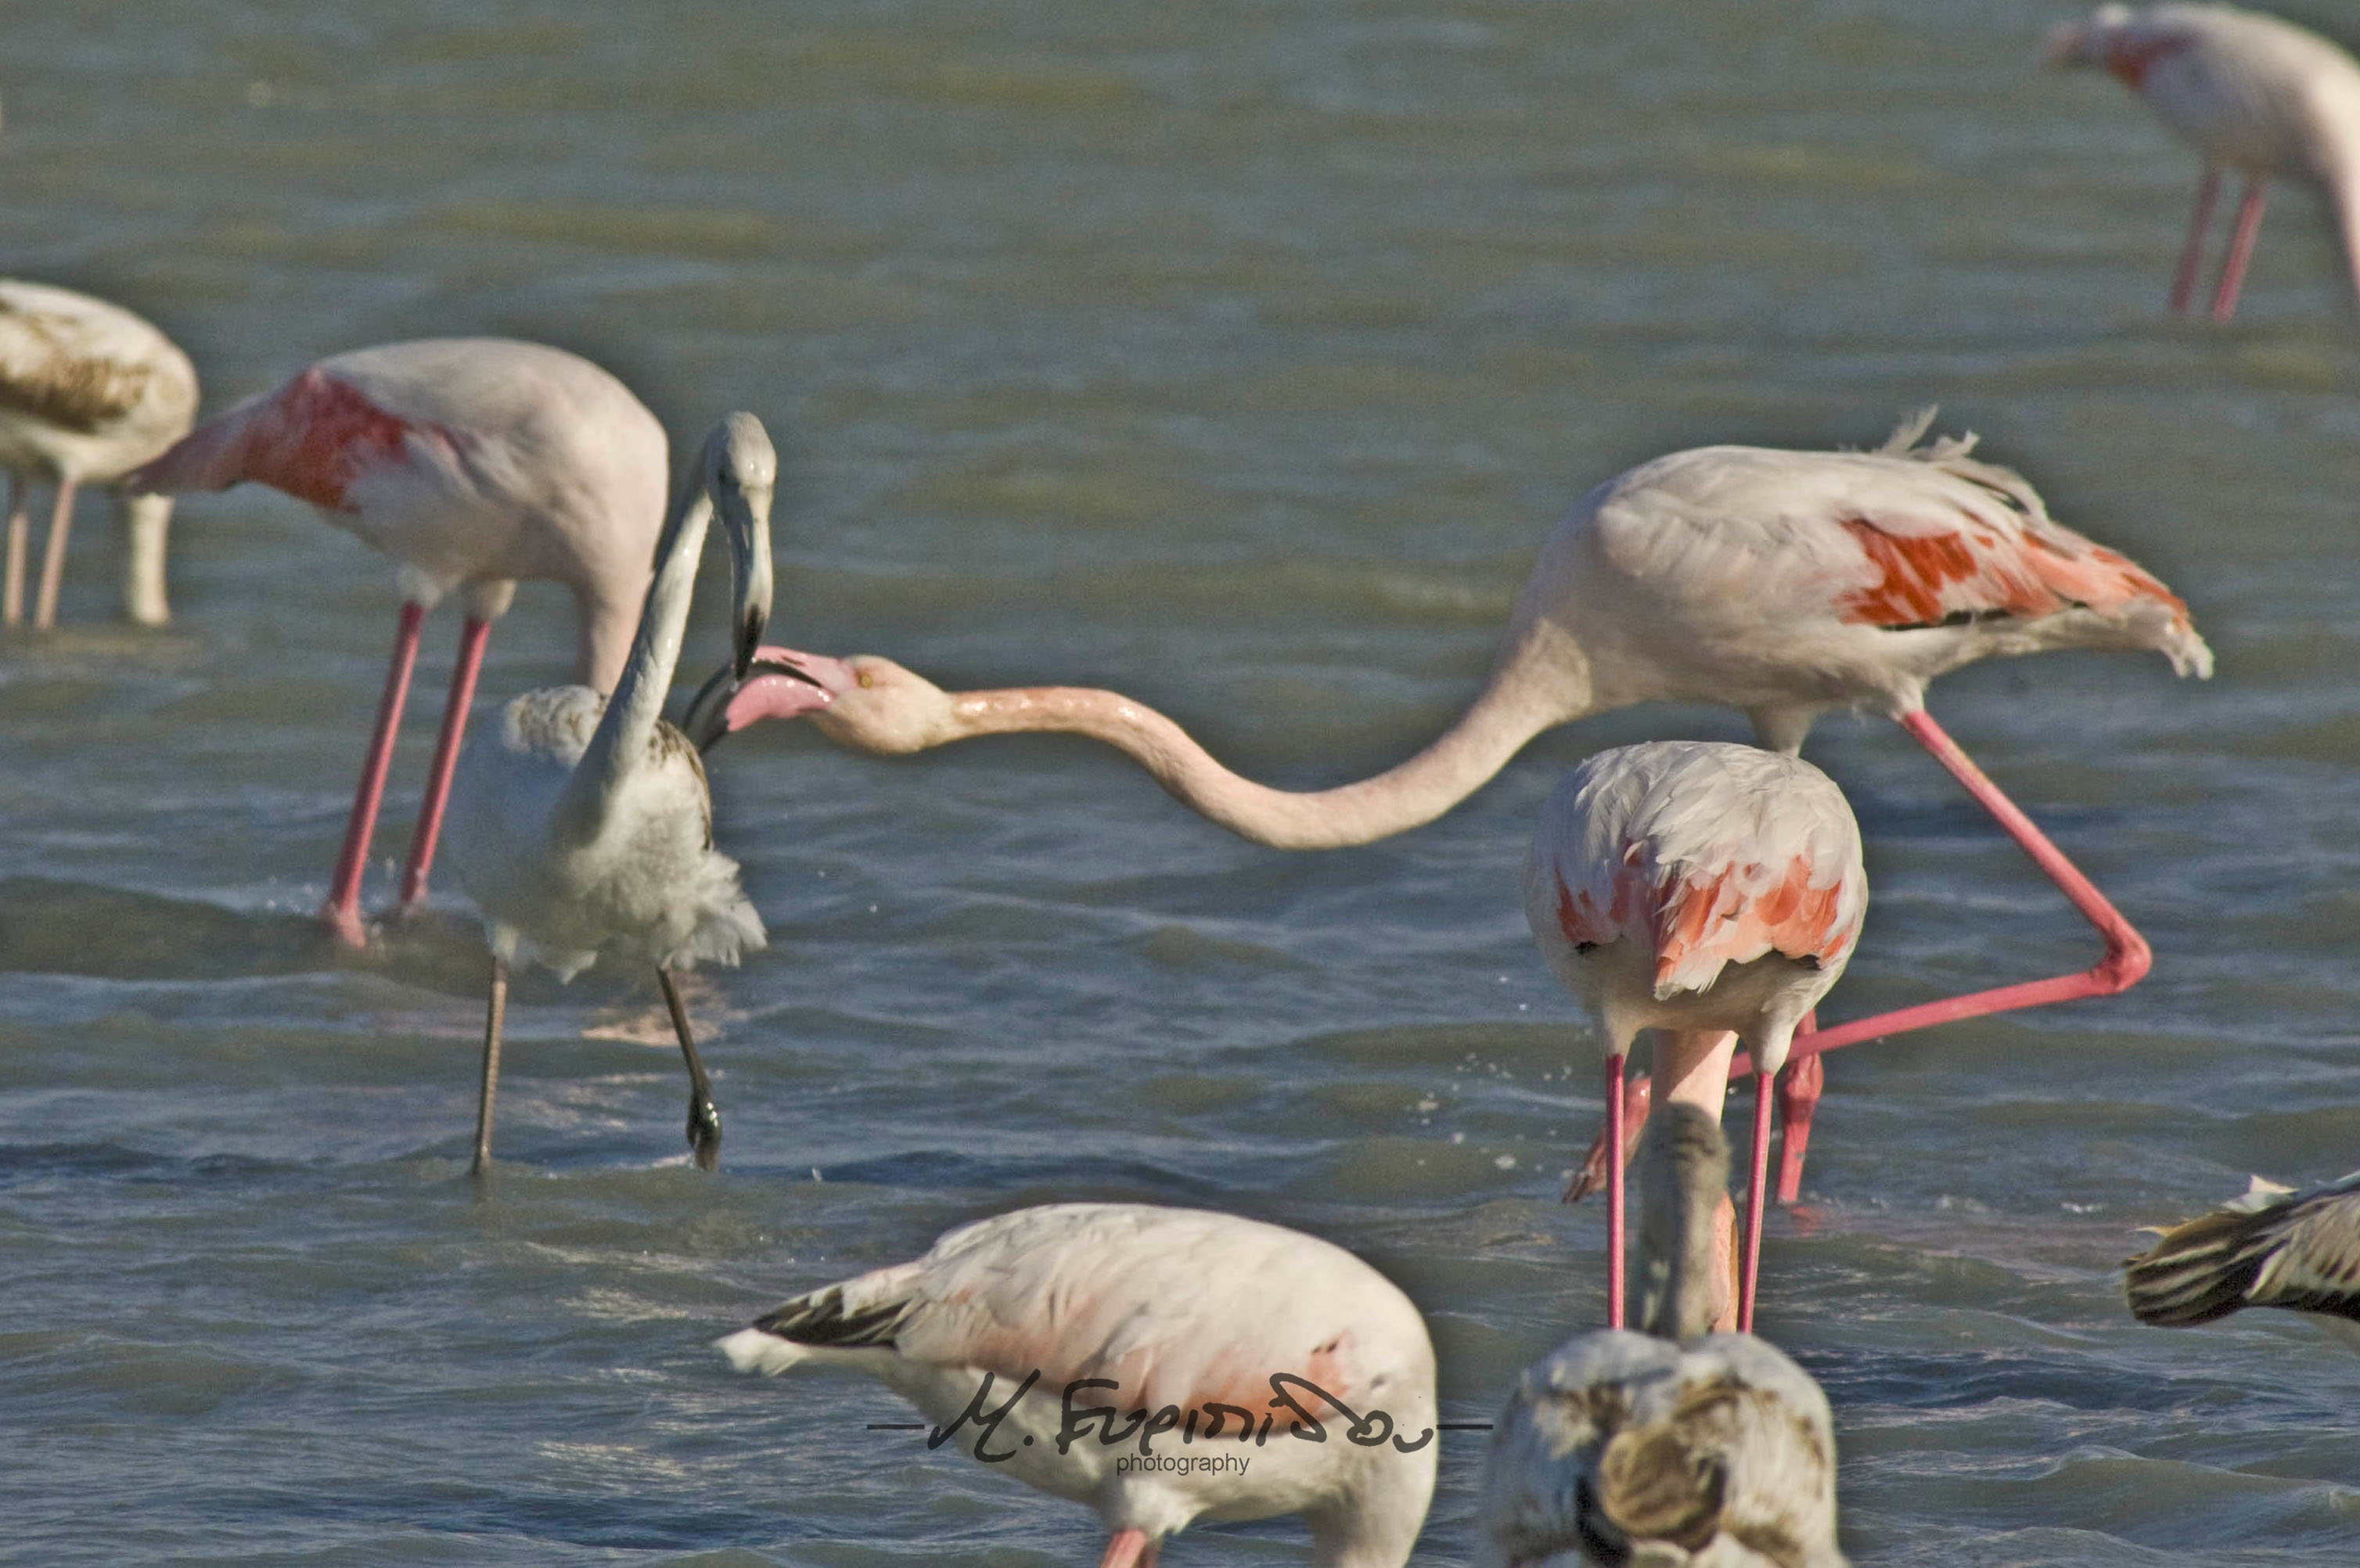 16-12-2018 flamingo at lady's mile salt lake Cyprus